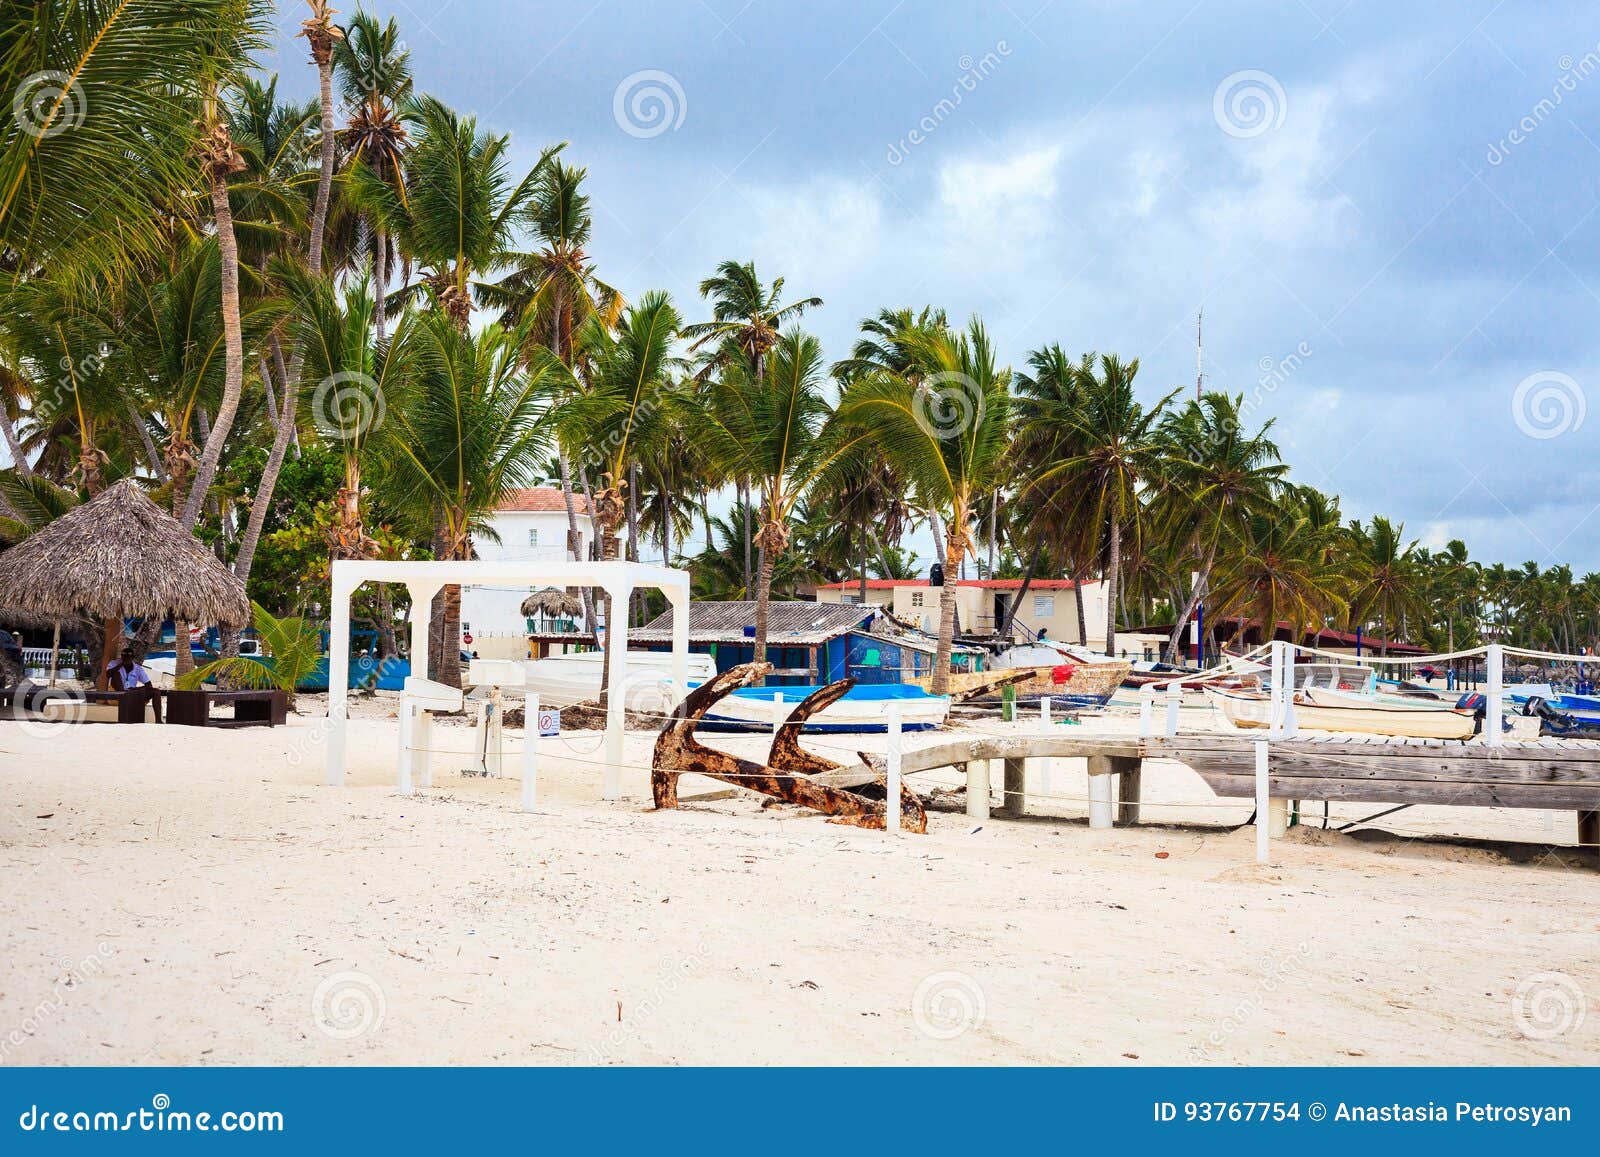 beautiful beach in cabeza de toro with boats and bridge, punta cana